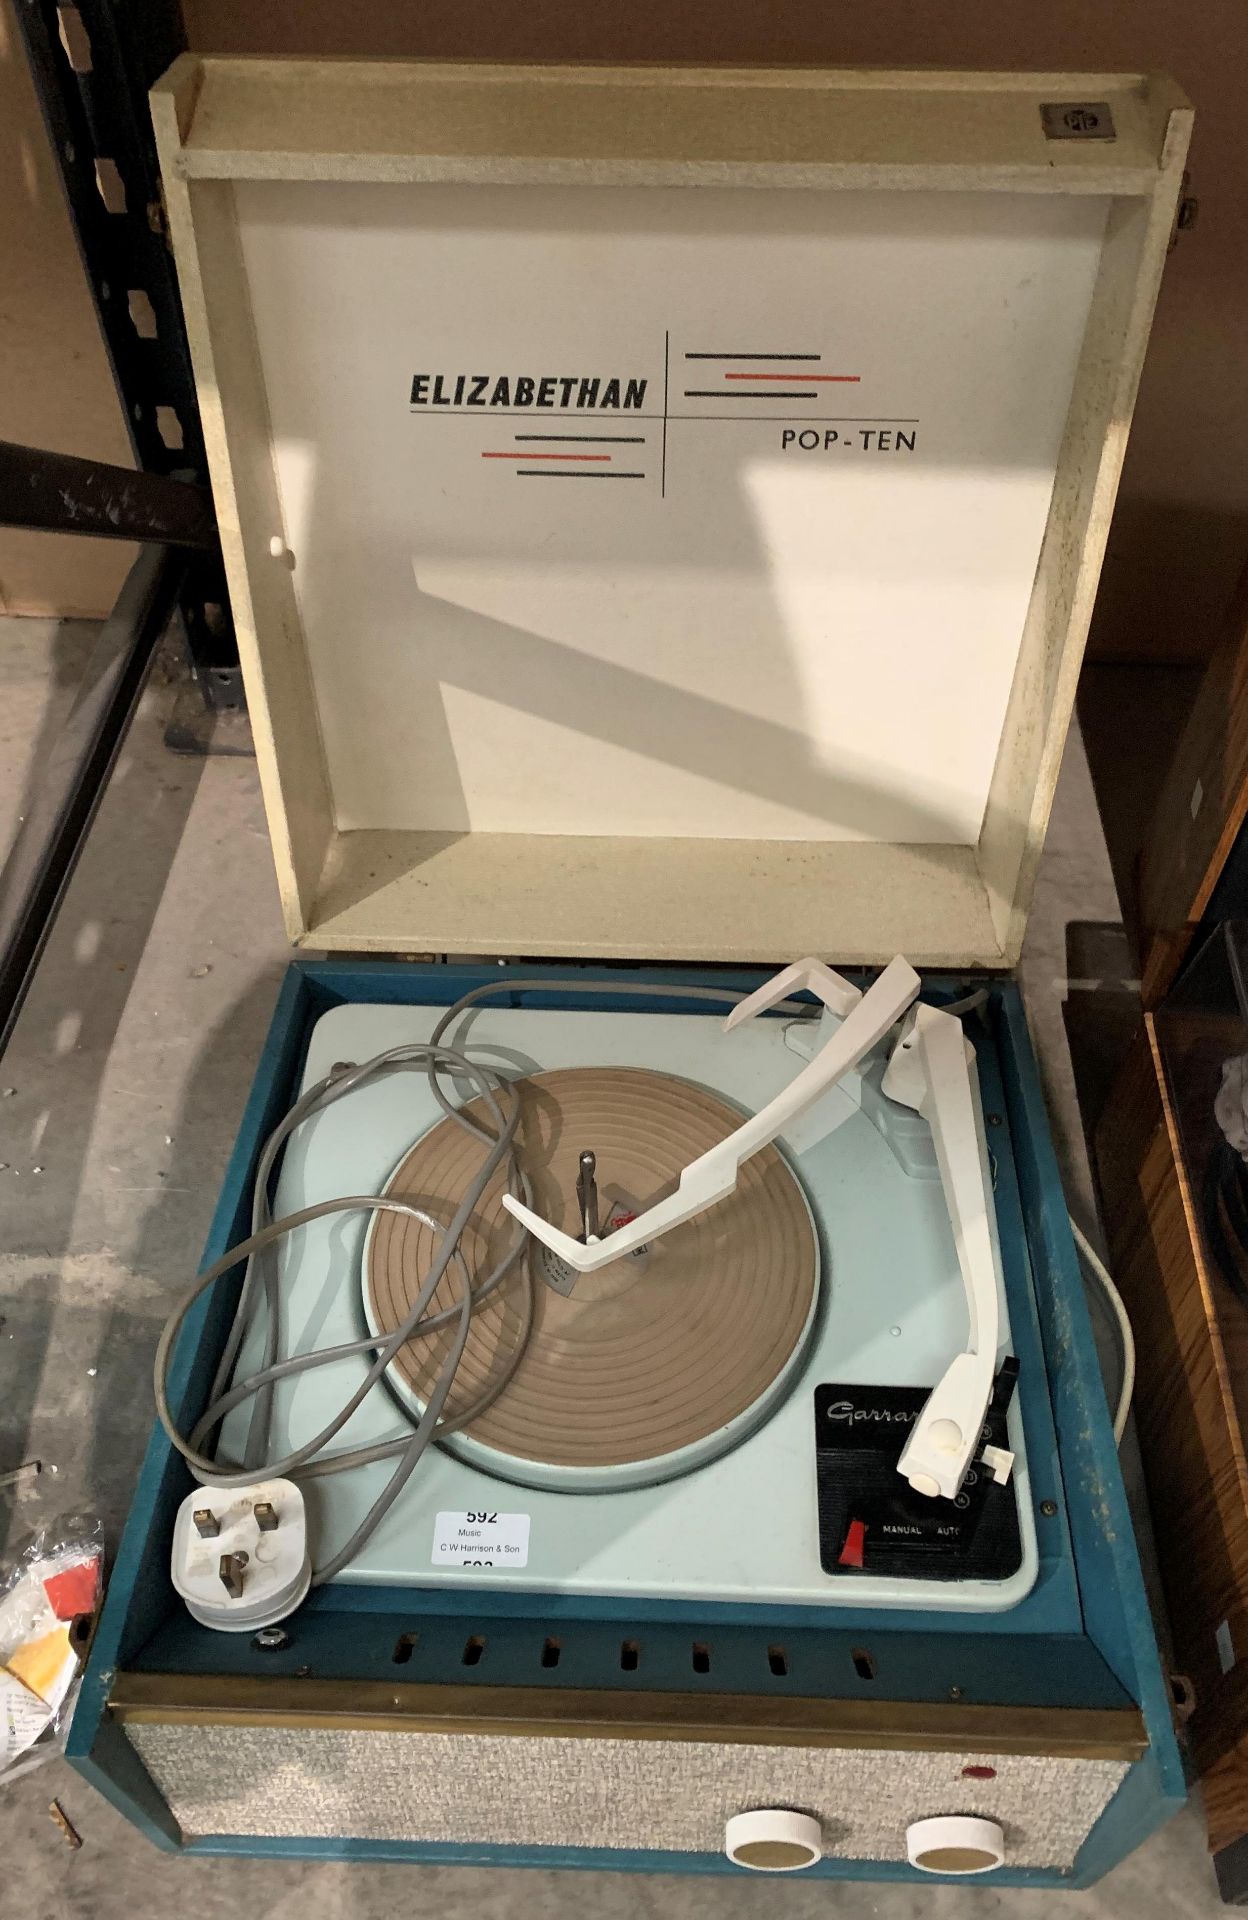 A Pye Elizabethan Pop 10 record player with Garrard deck